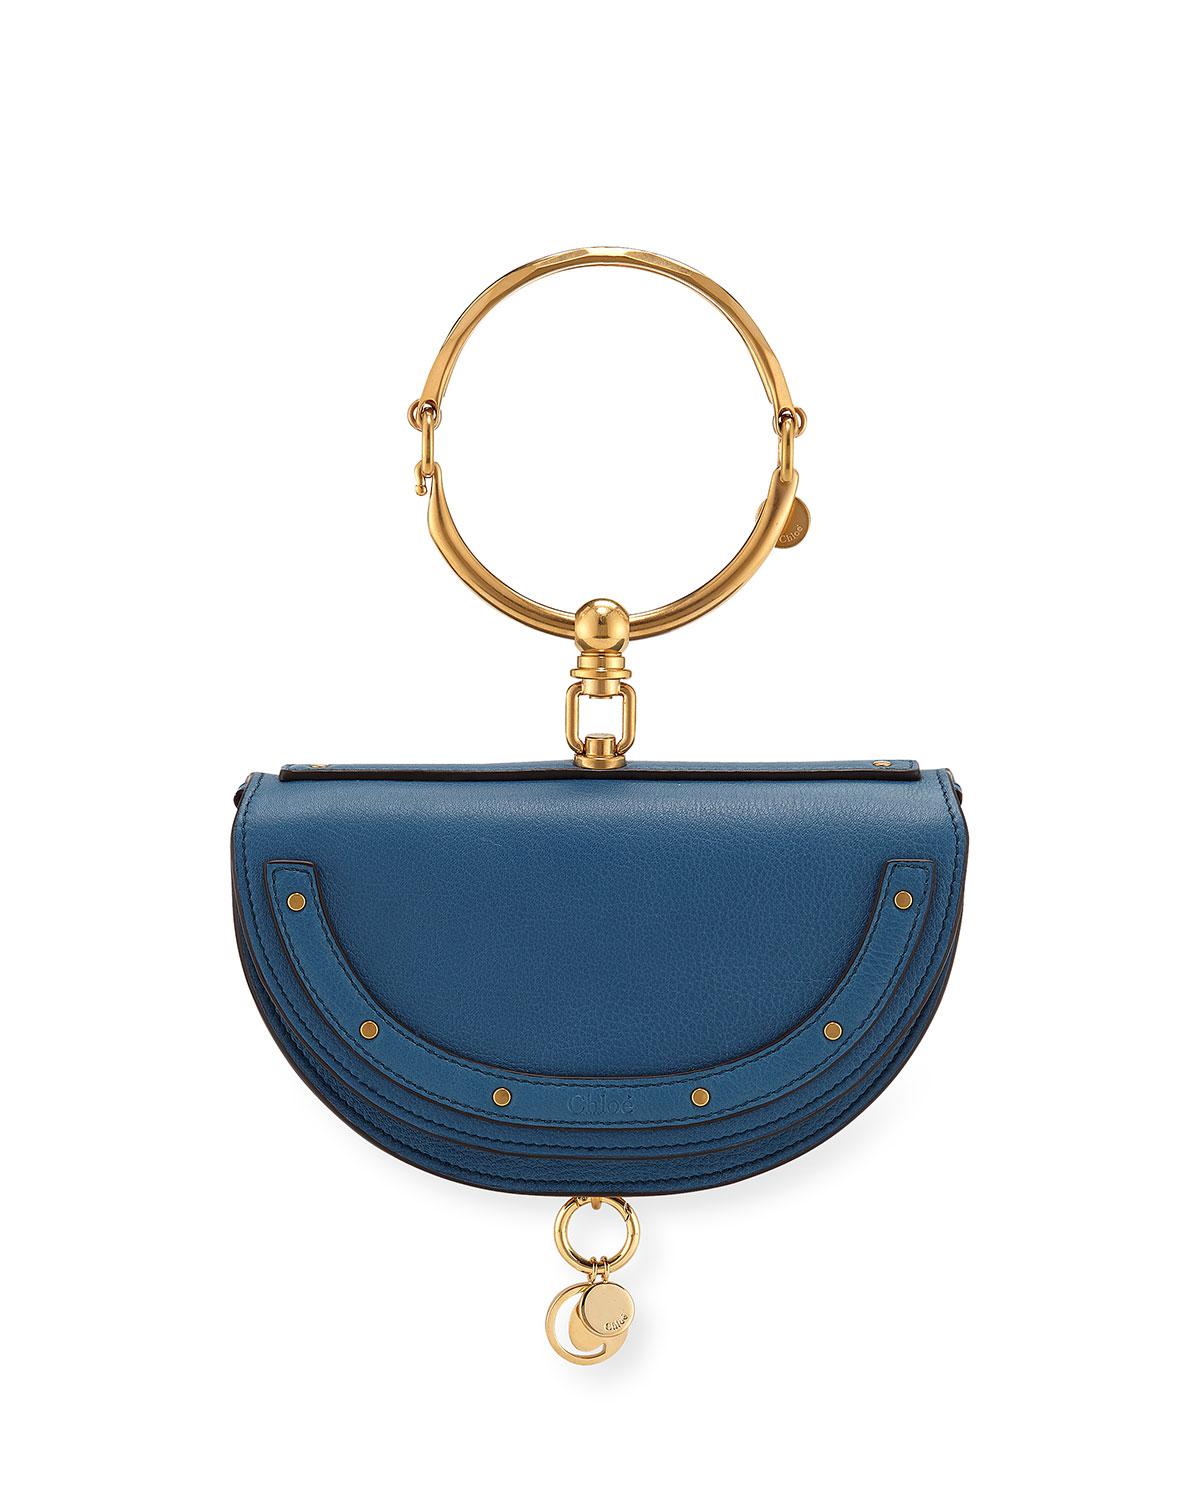 Lyst - Chloé Nile Small Bracelet Minaudiere Bag in Blue